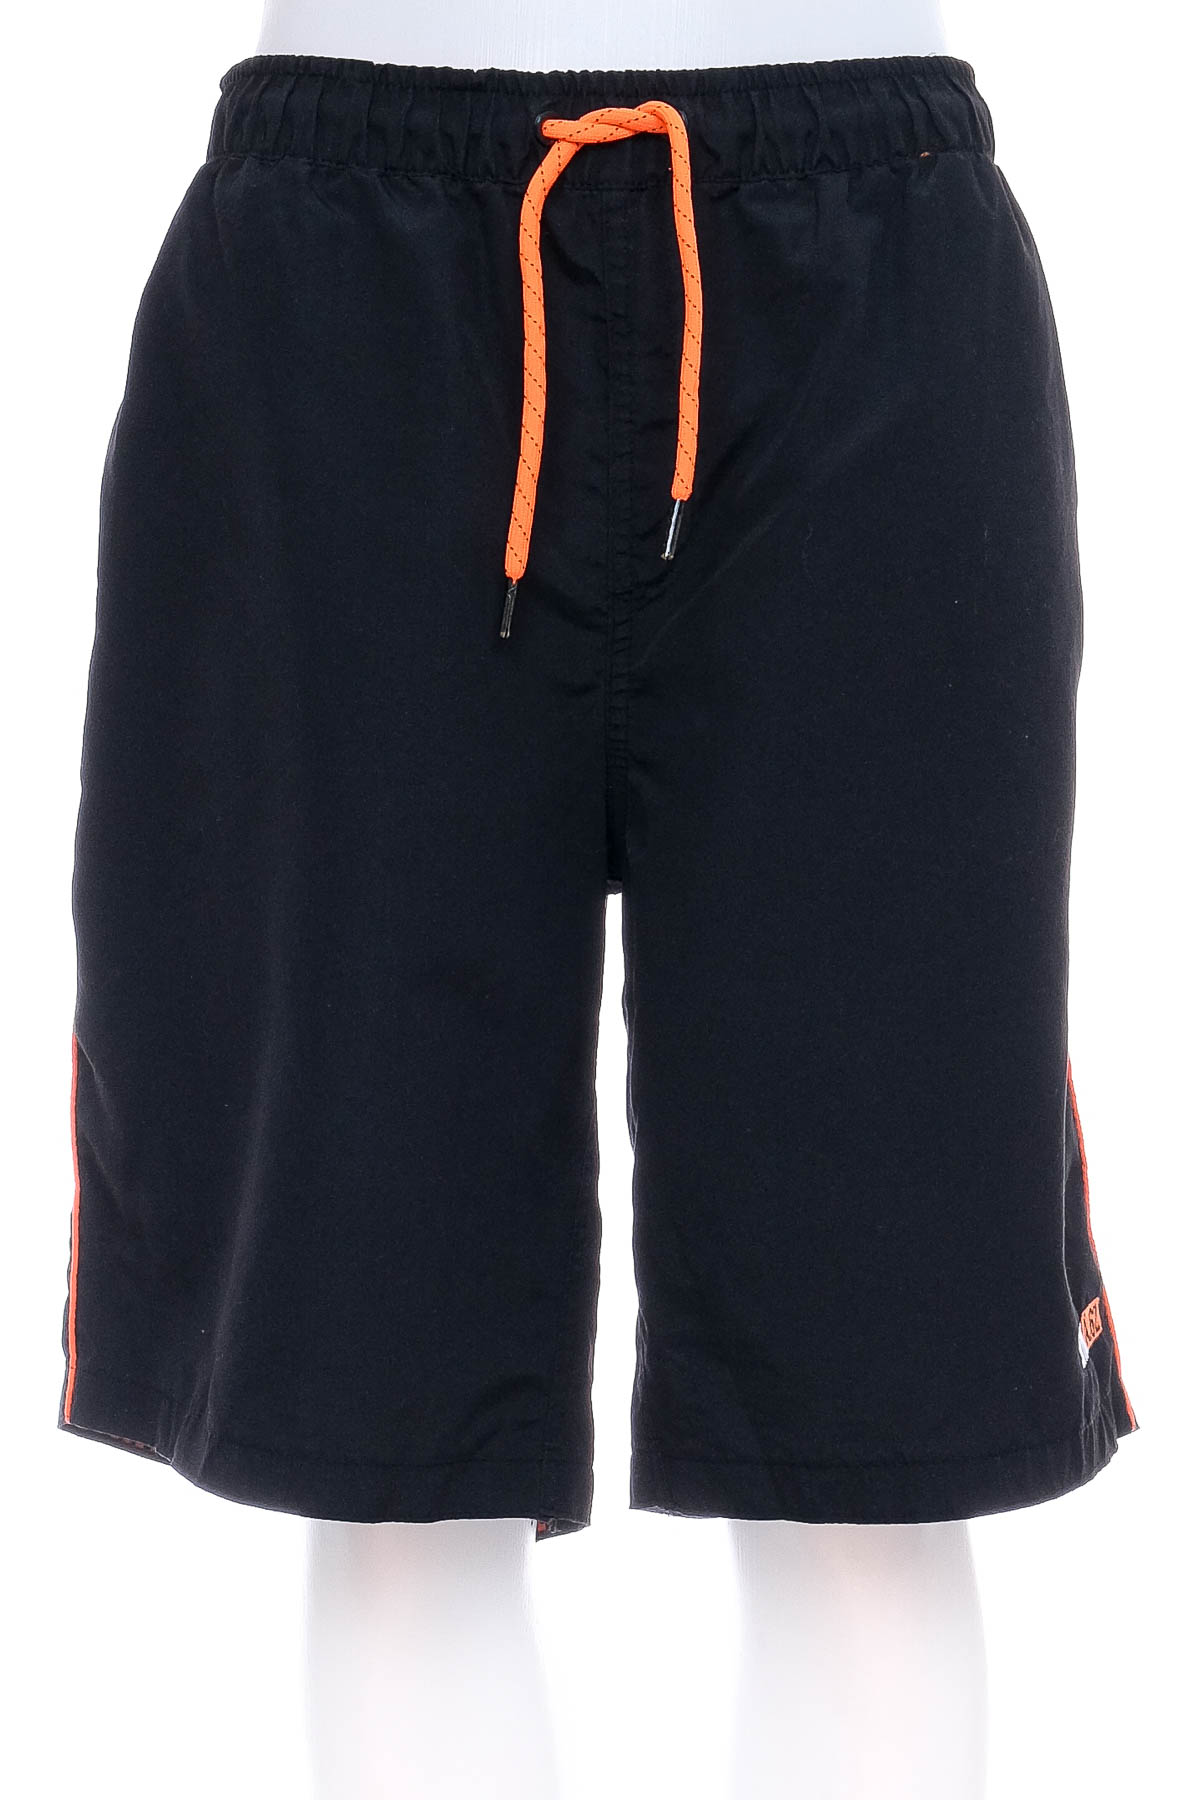 Men's shorts - STHRN A.62 - 0